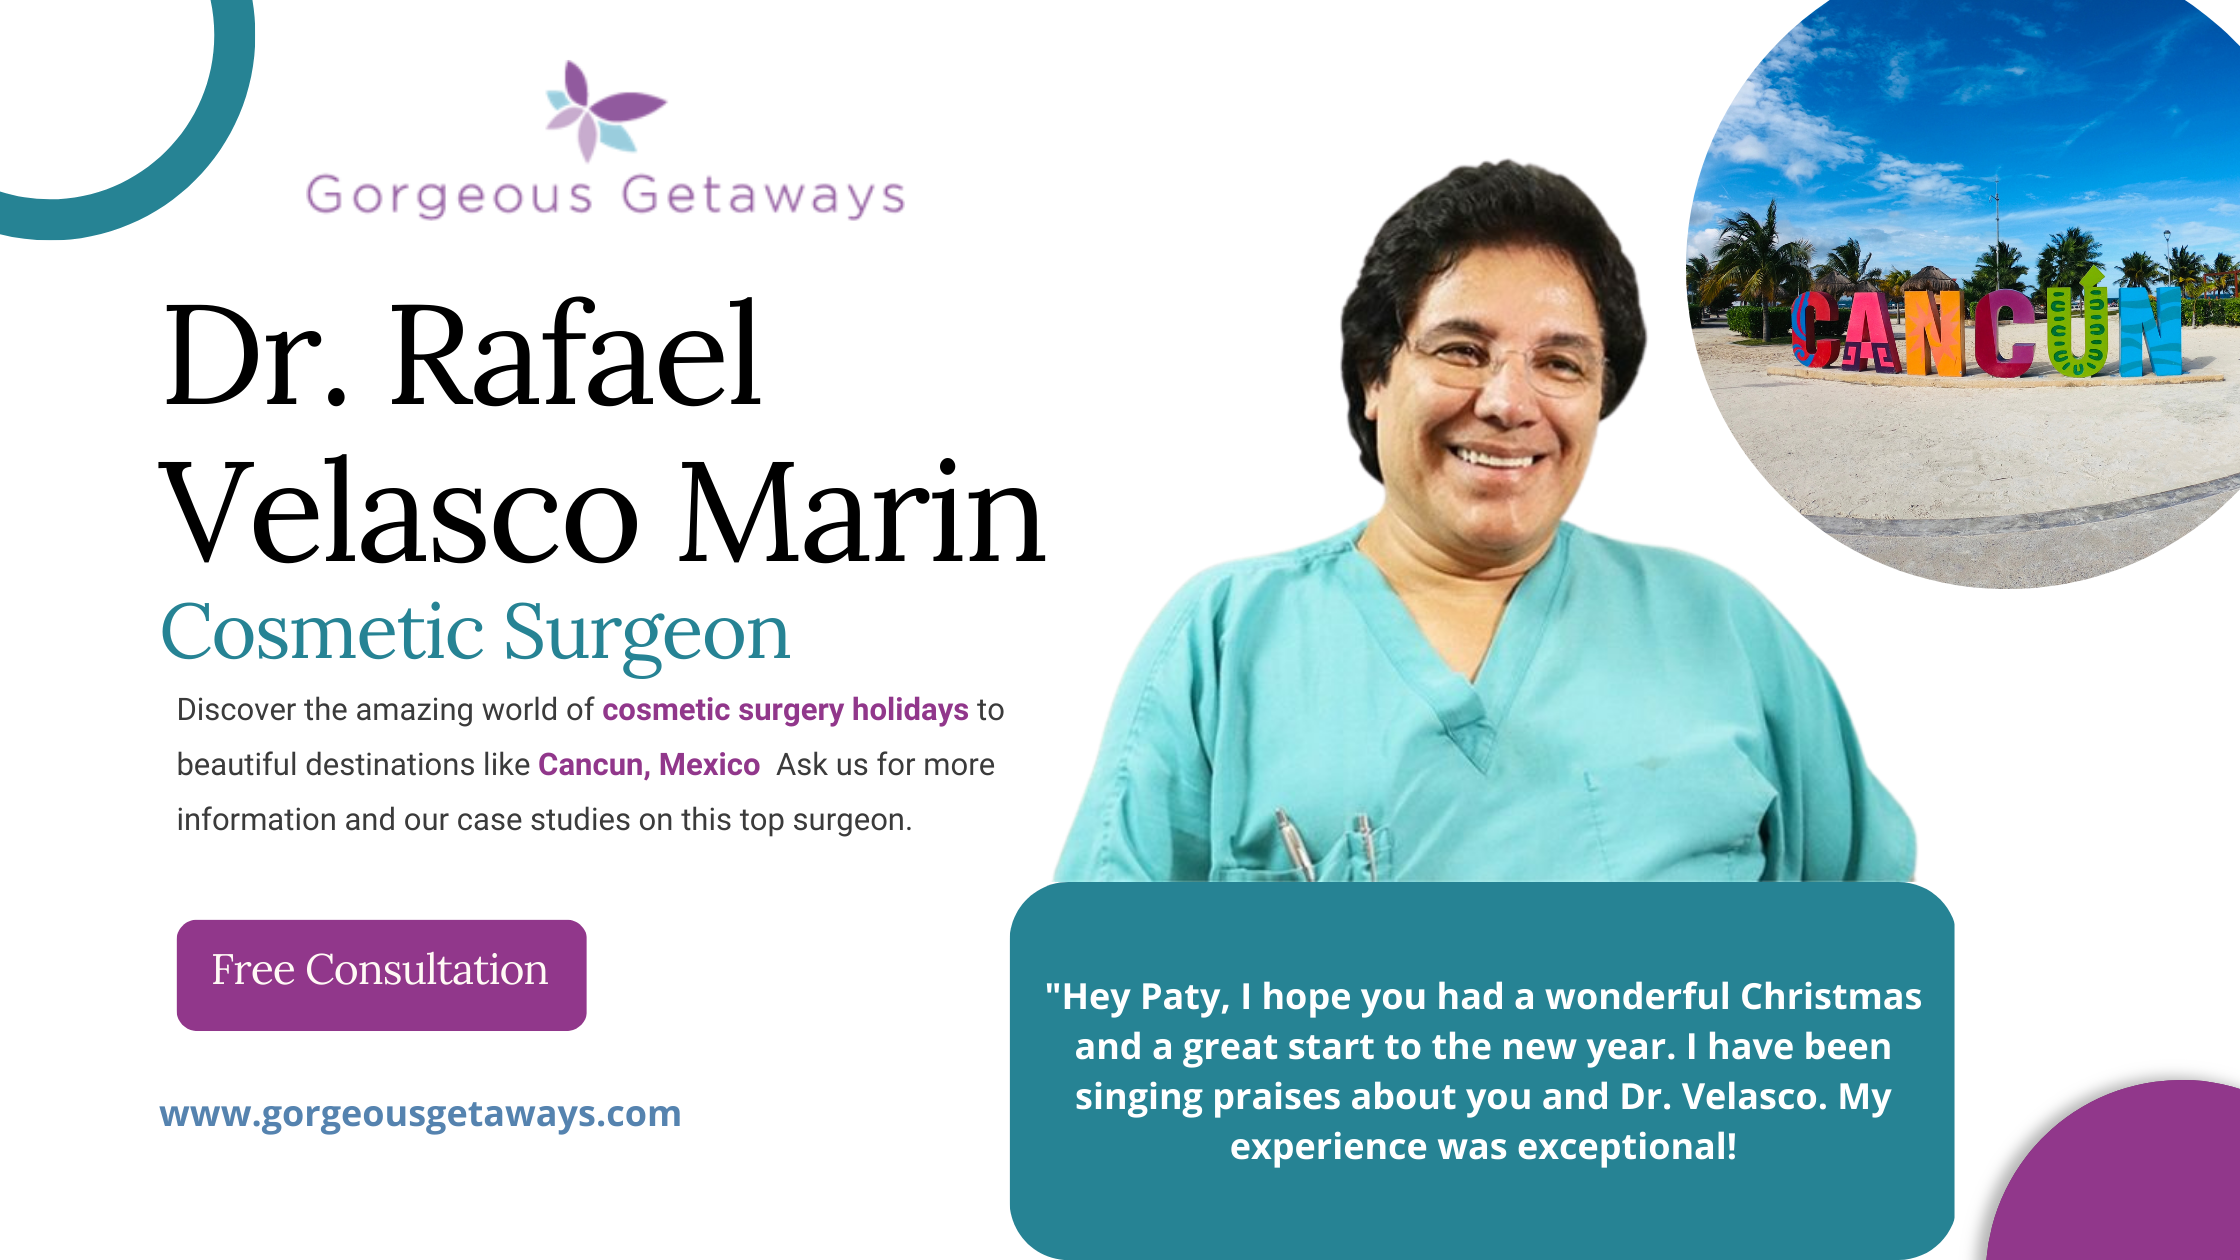 Meet Dr Rafael Valasco Marin